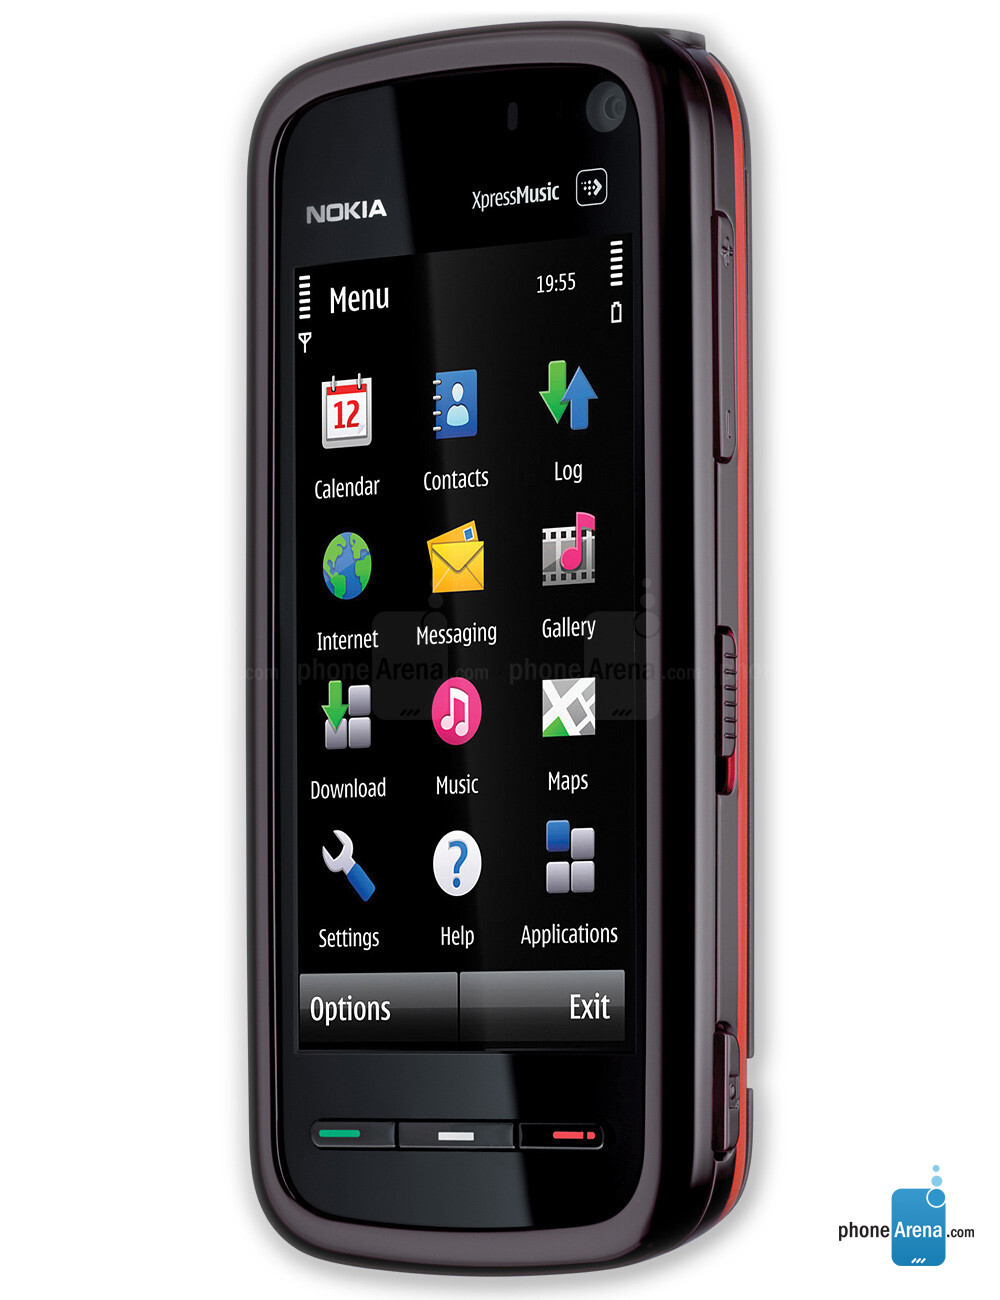 Nokia-5800-XpressMusic-1.jpg